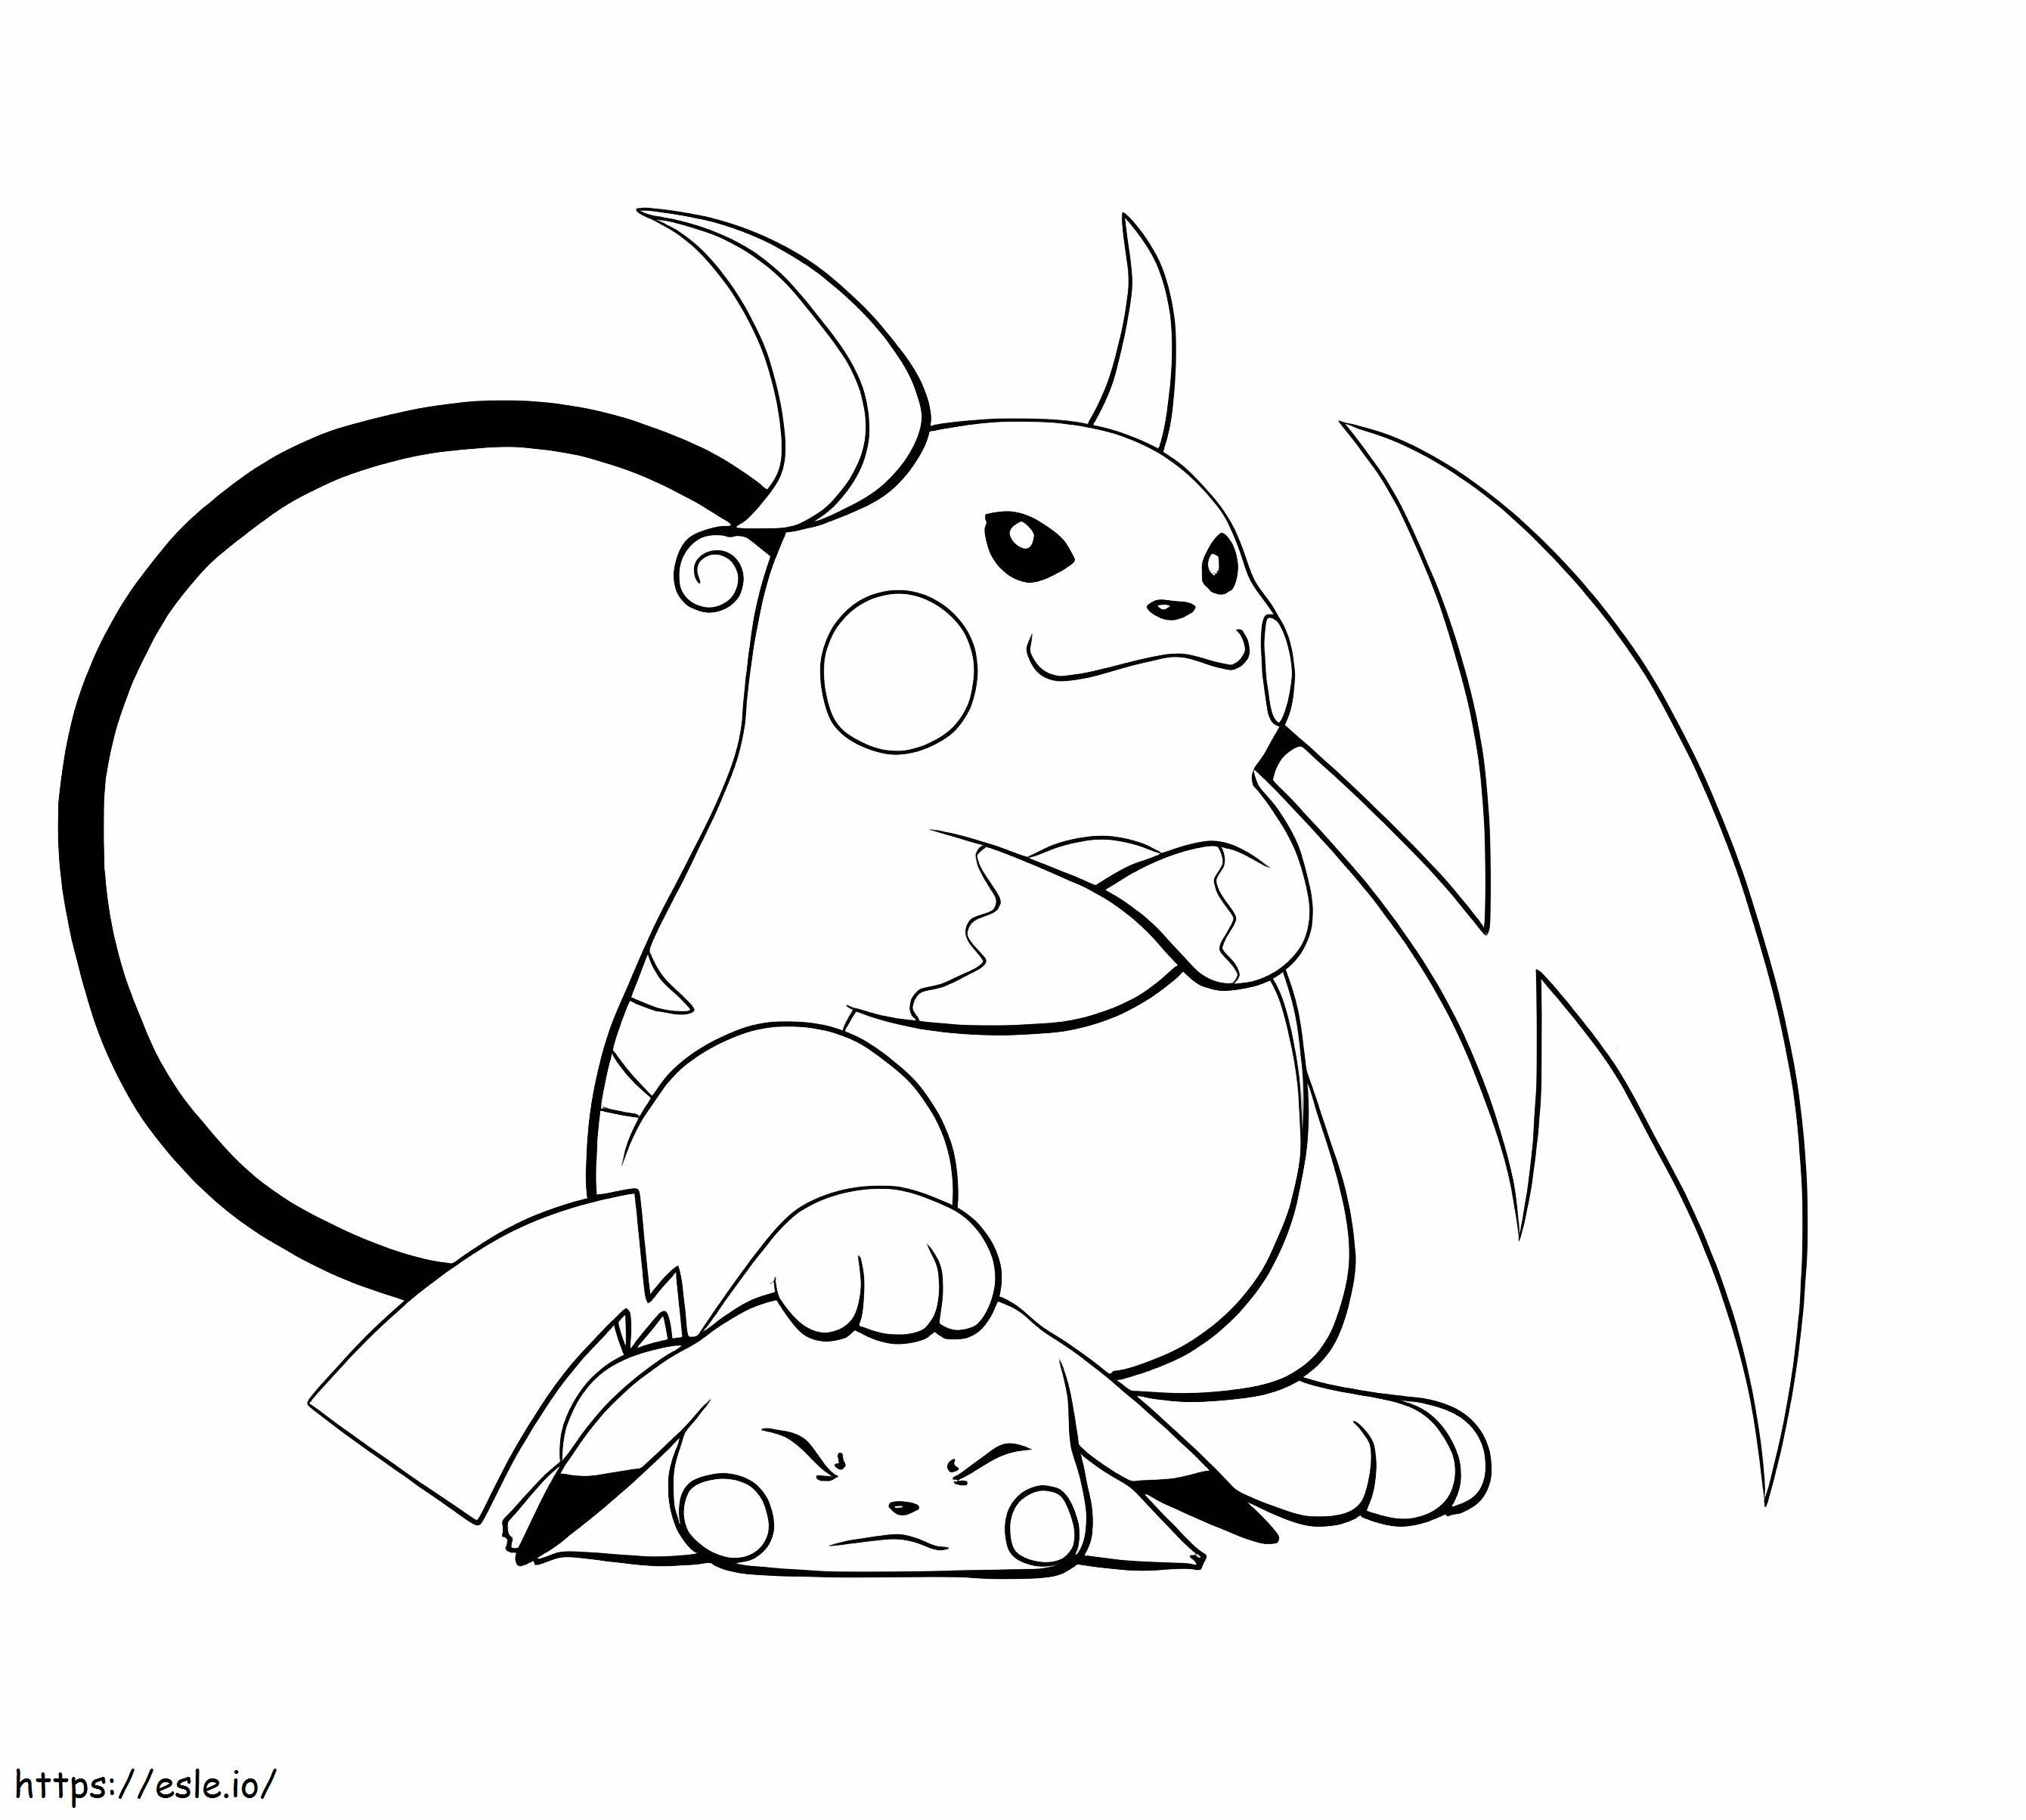 Raichu And Pikachu coloring page